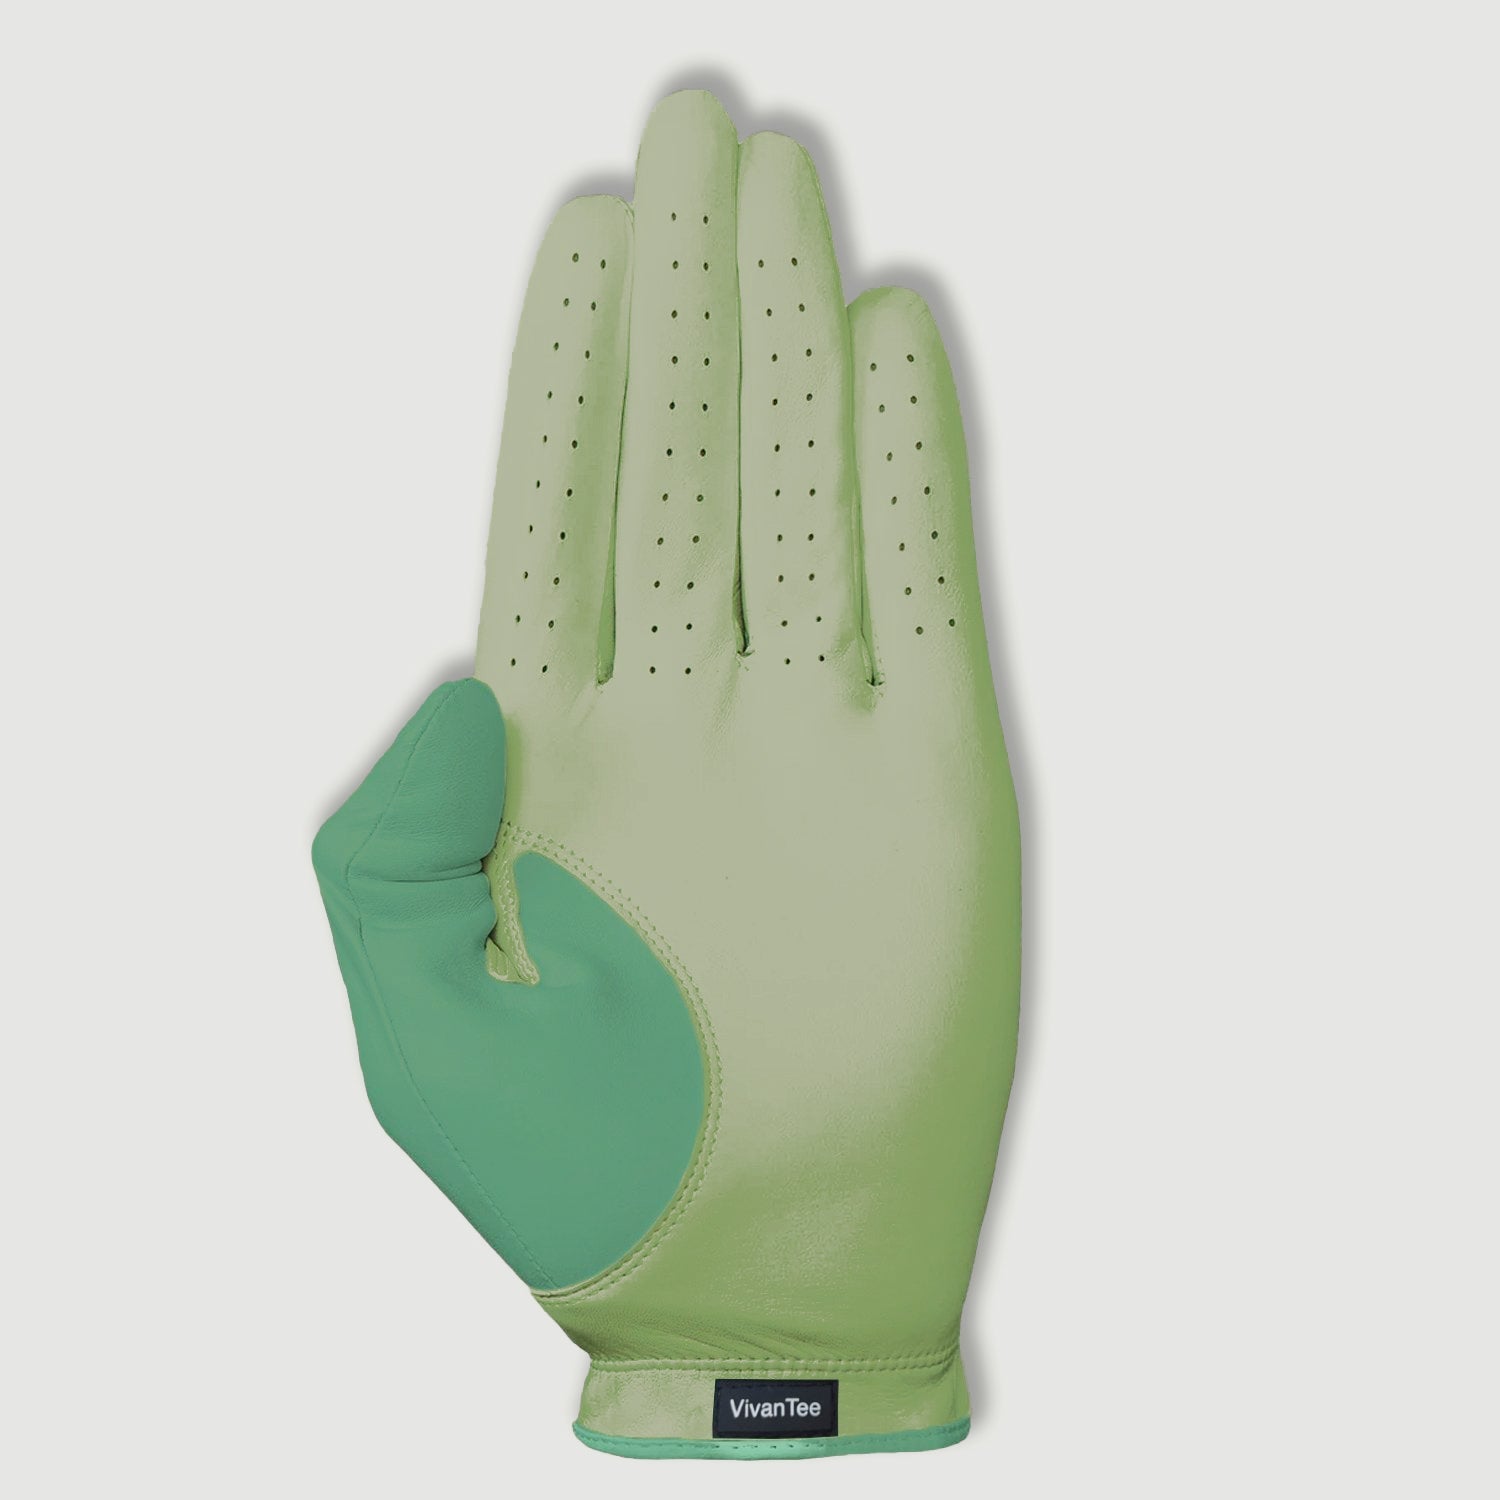 Premium mint green golf glove for men